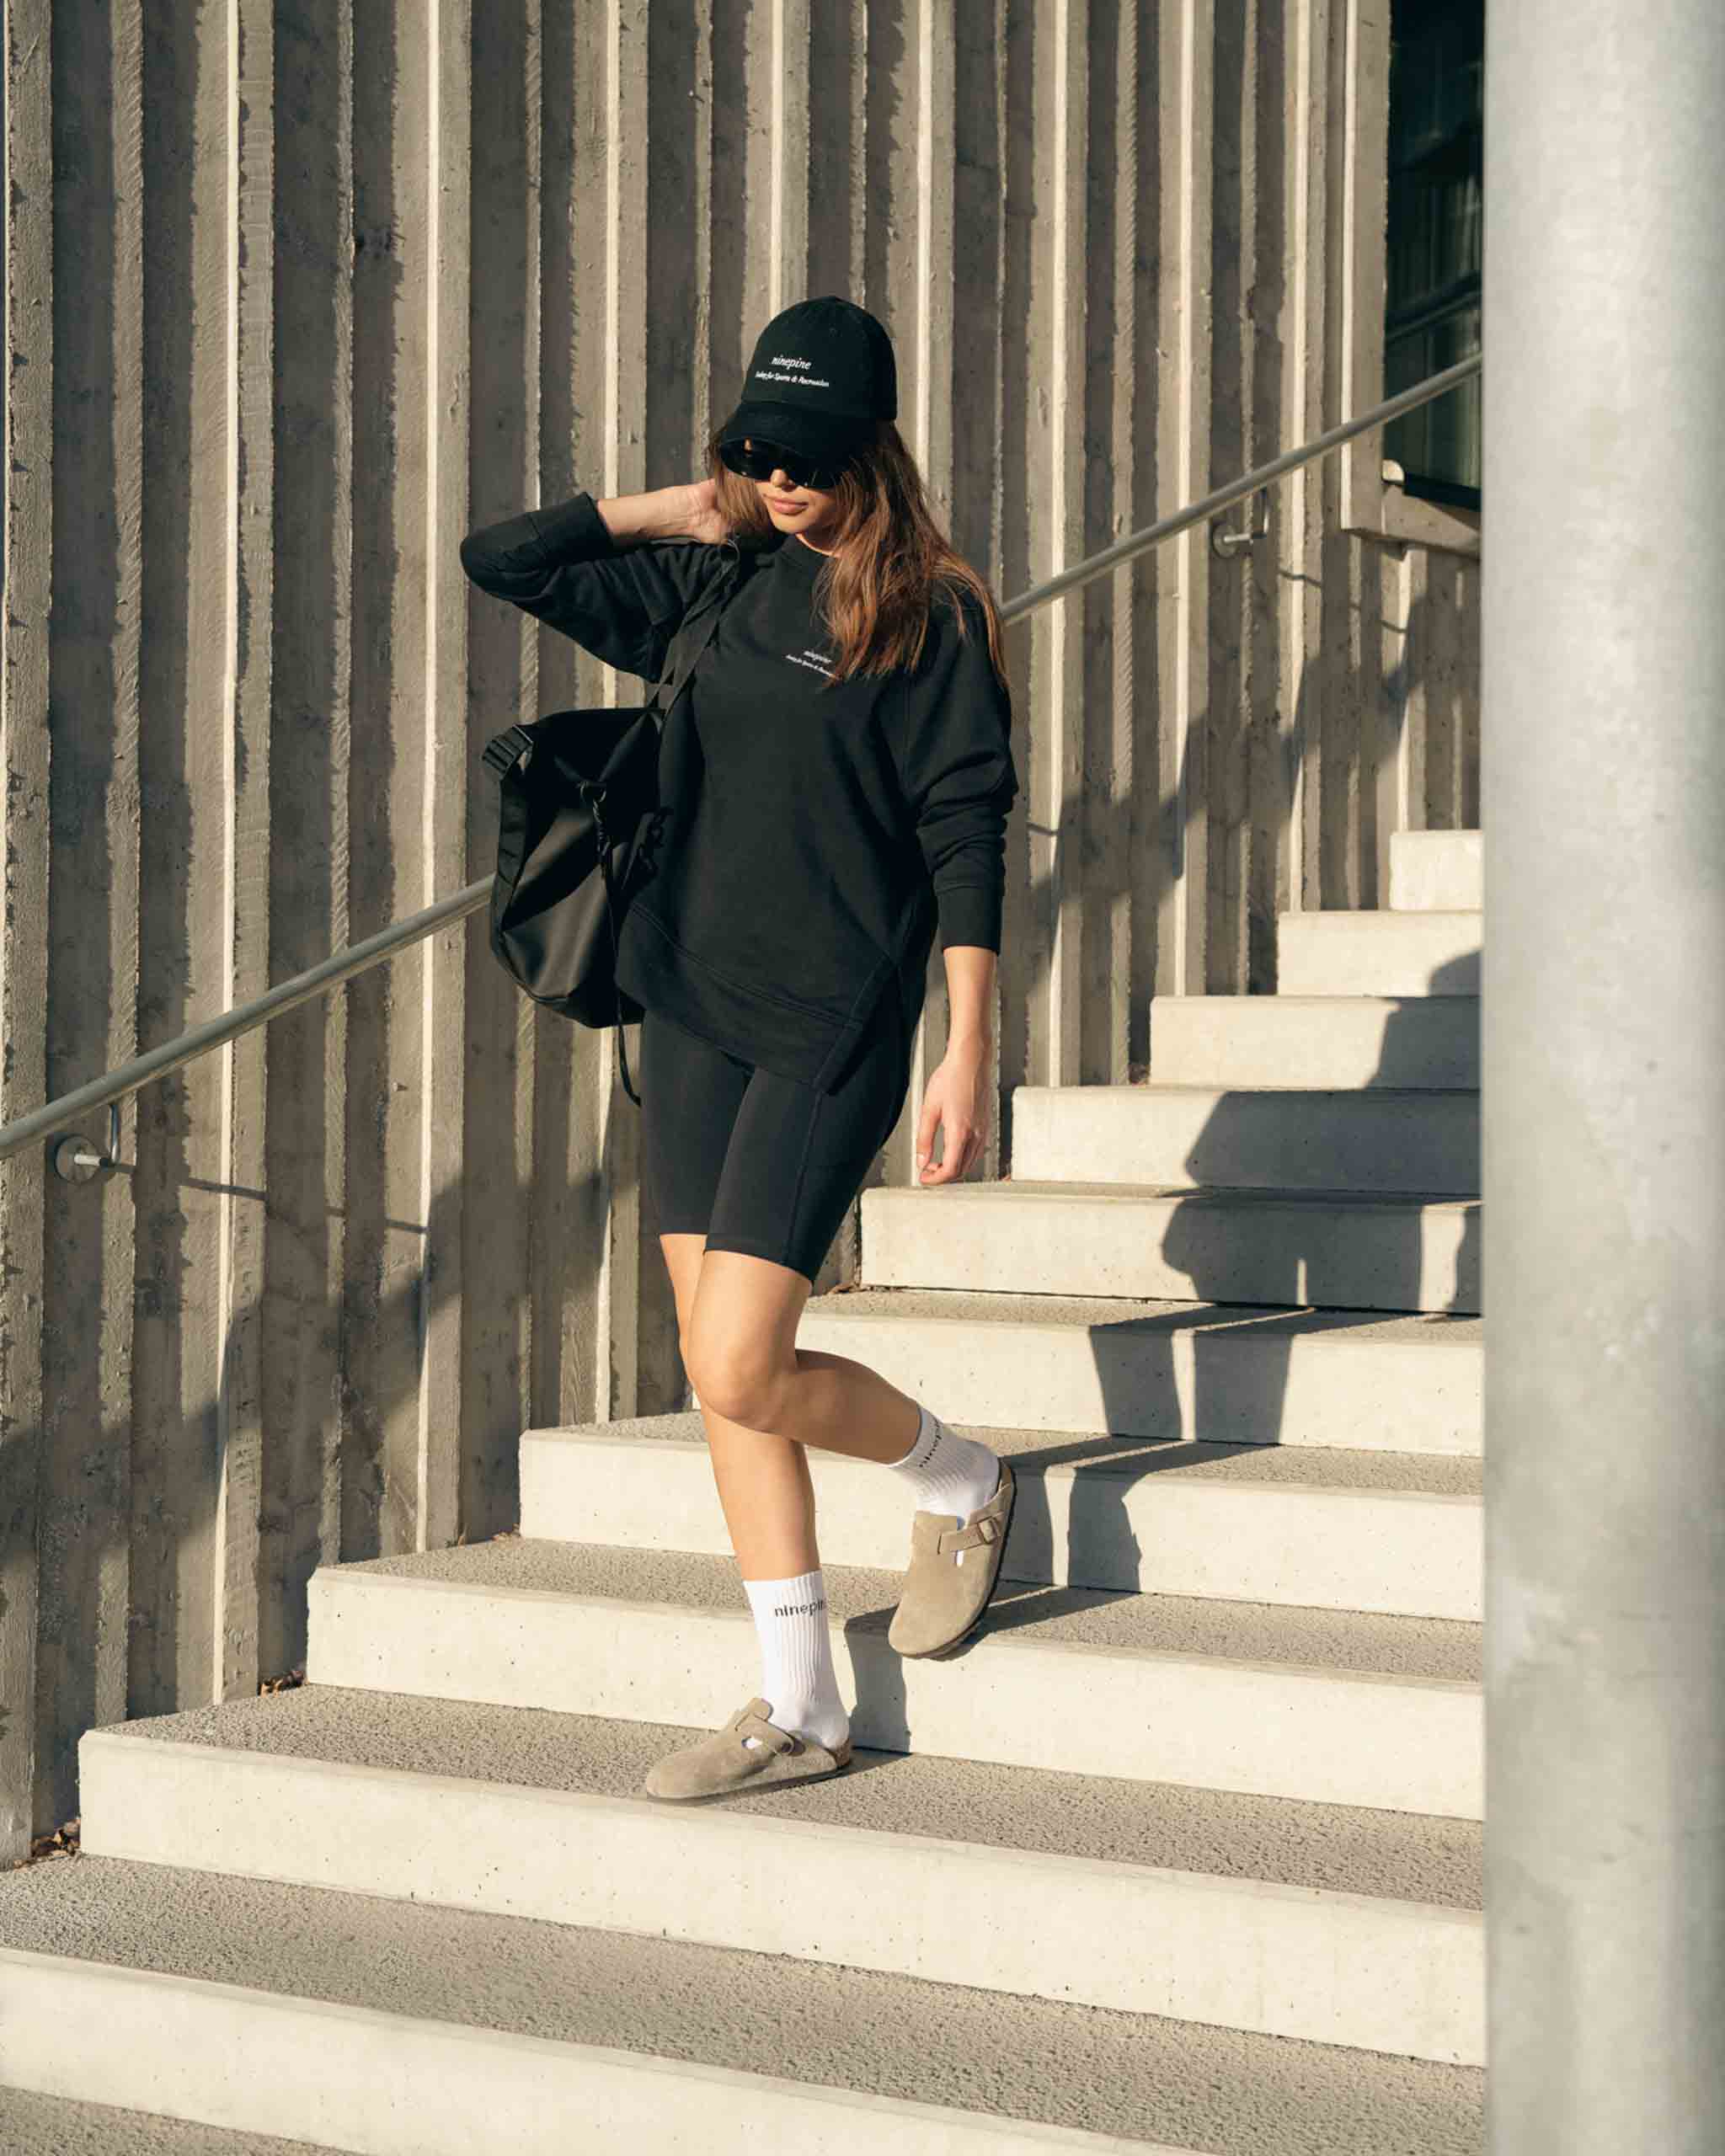 Girl walking down stairs wearing ninepine sweater, biker shorts and sandels